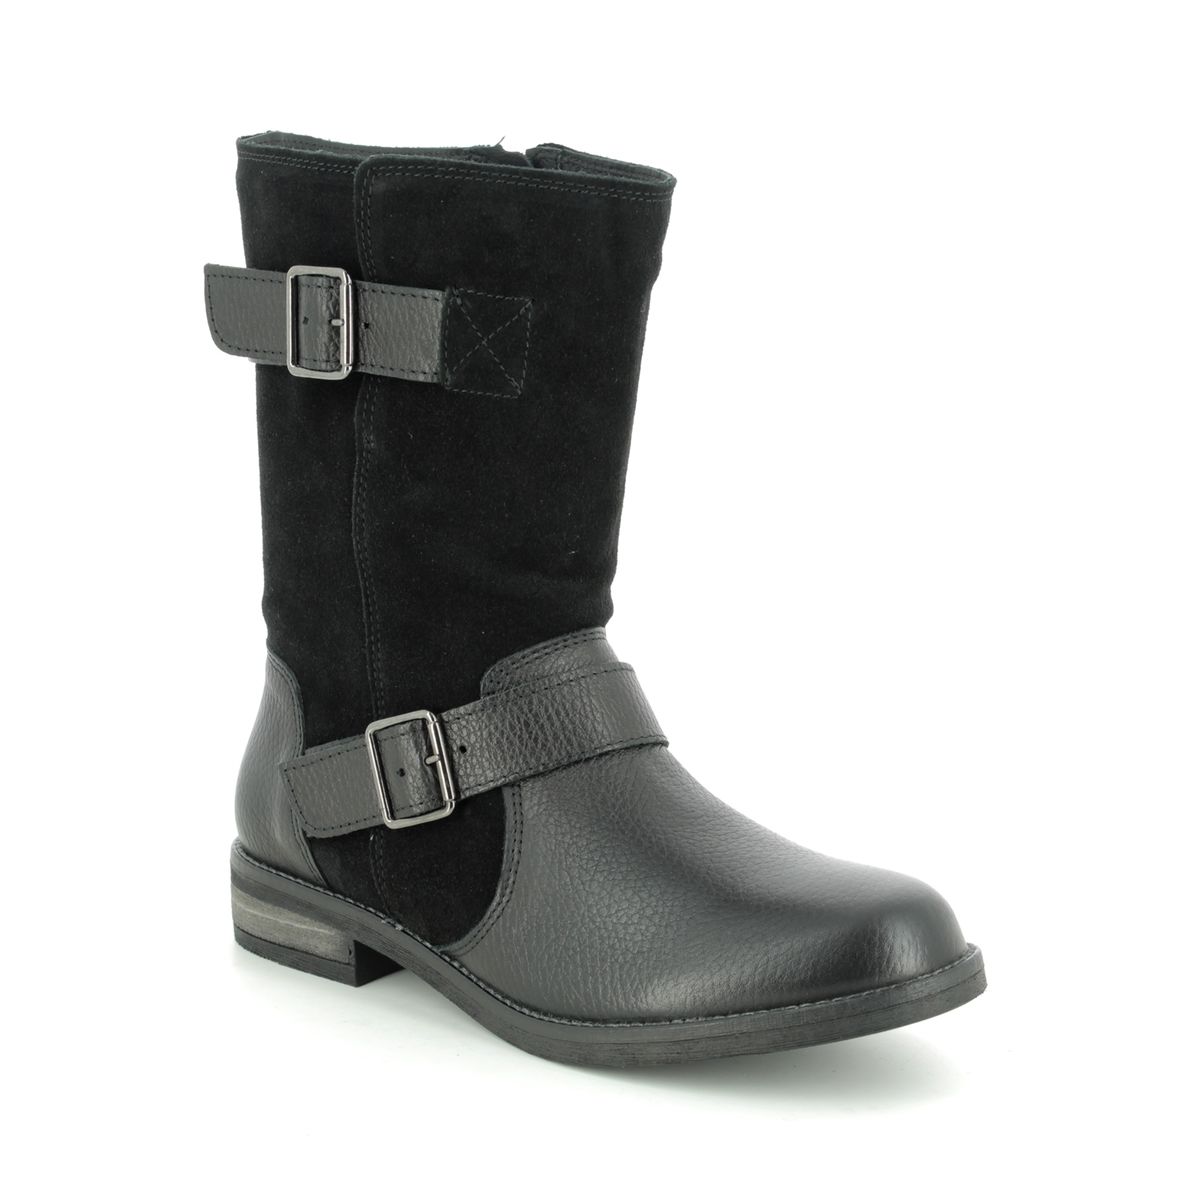 Clarks Demi Flow Black leather calf boots